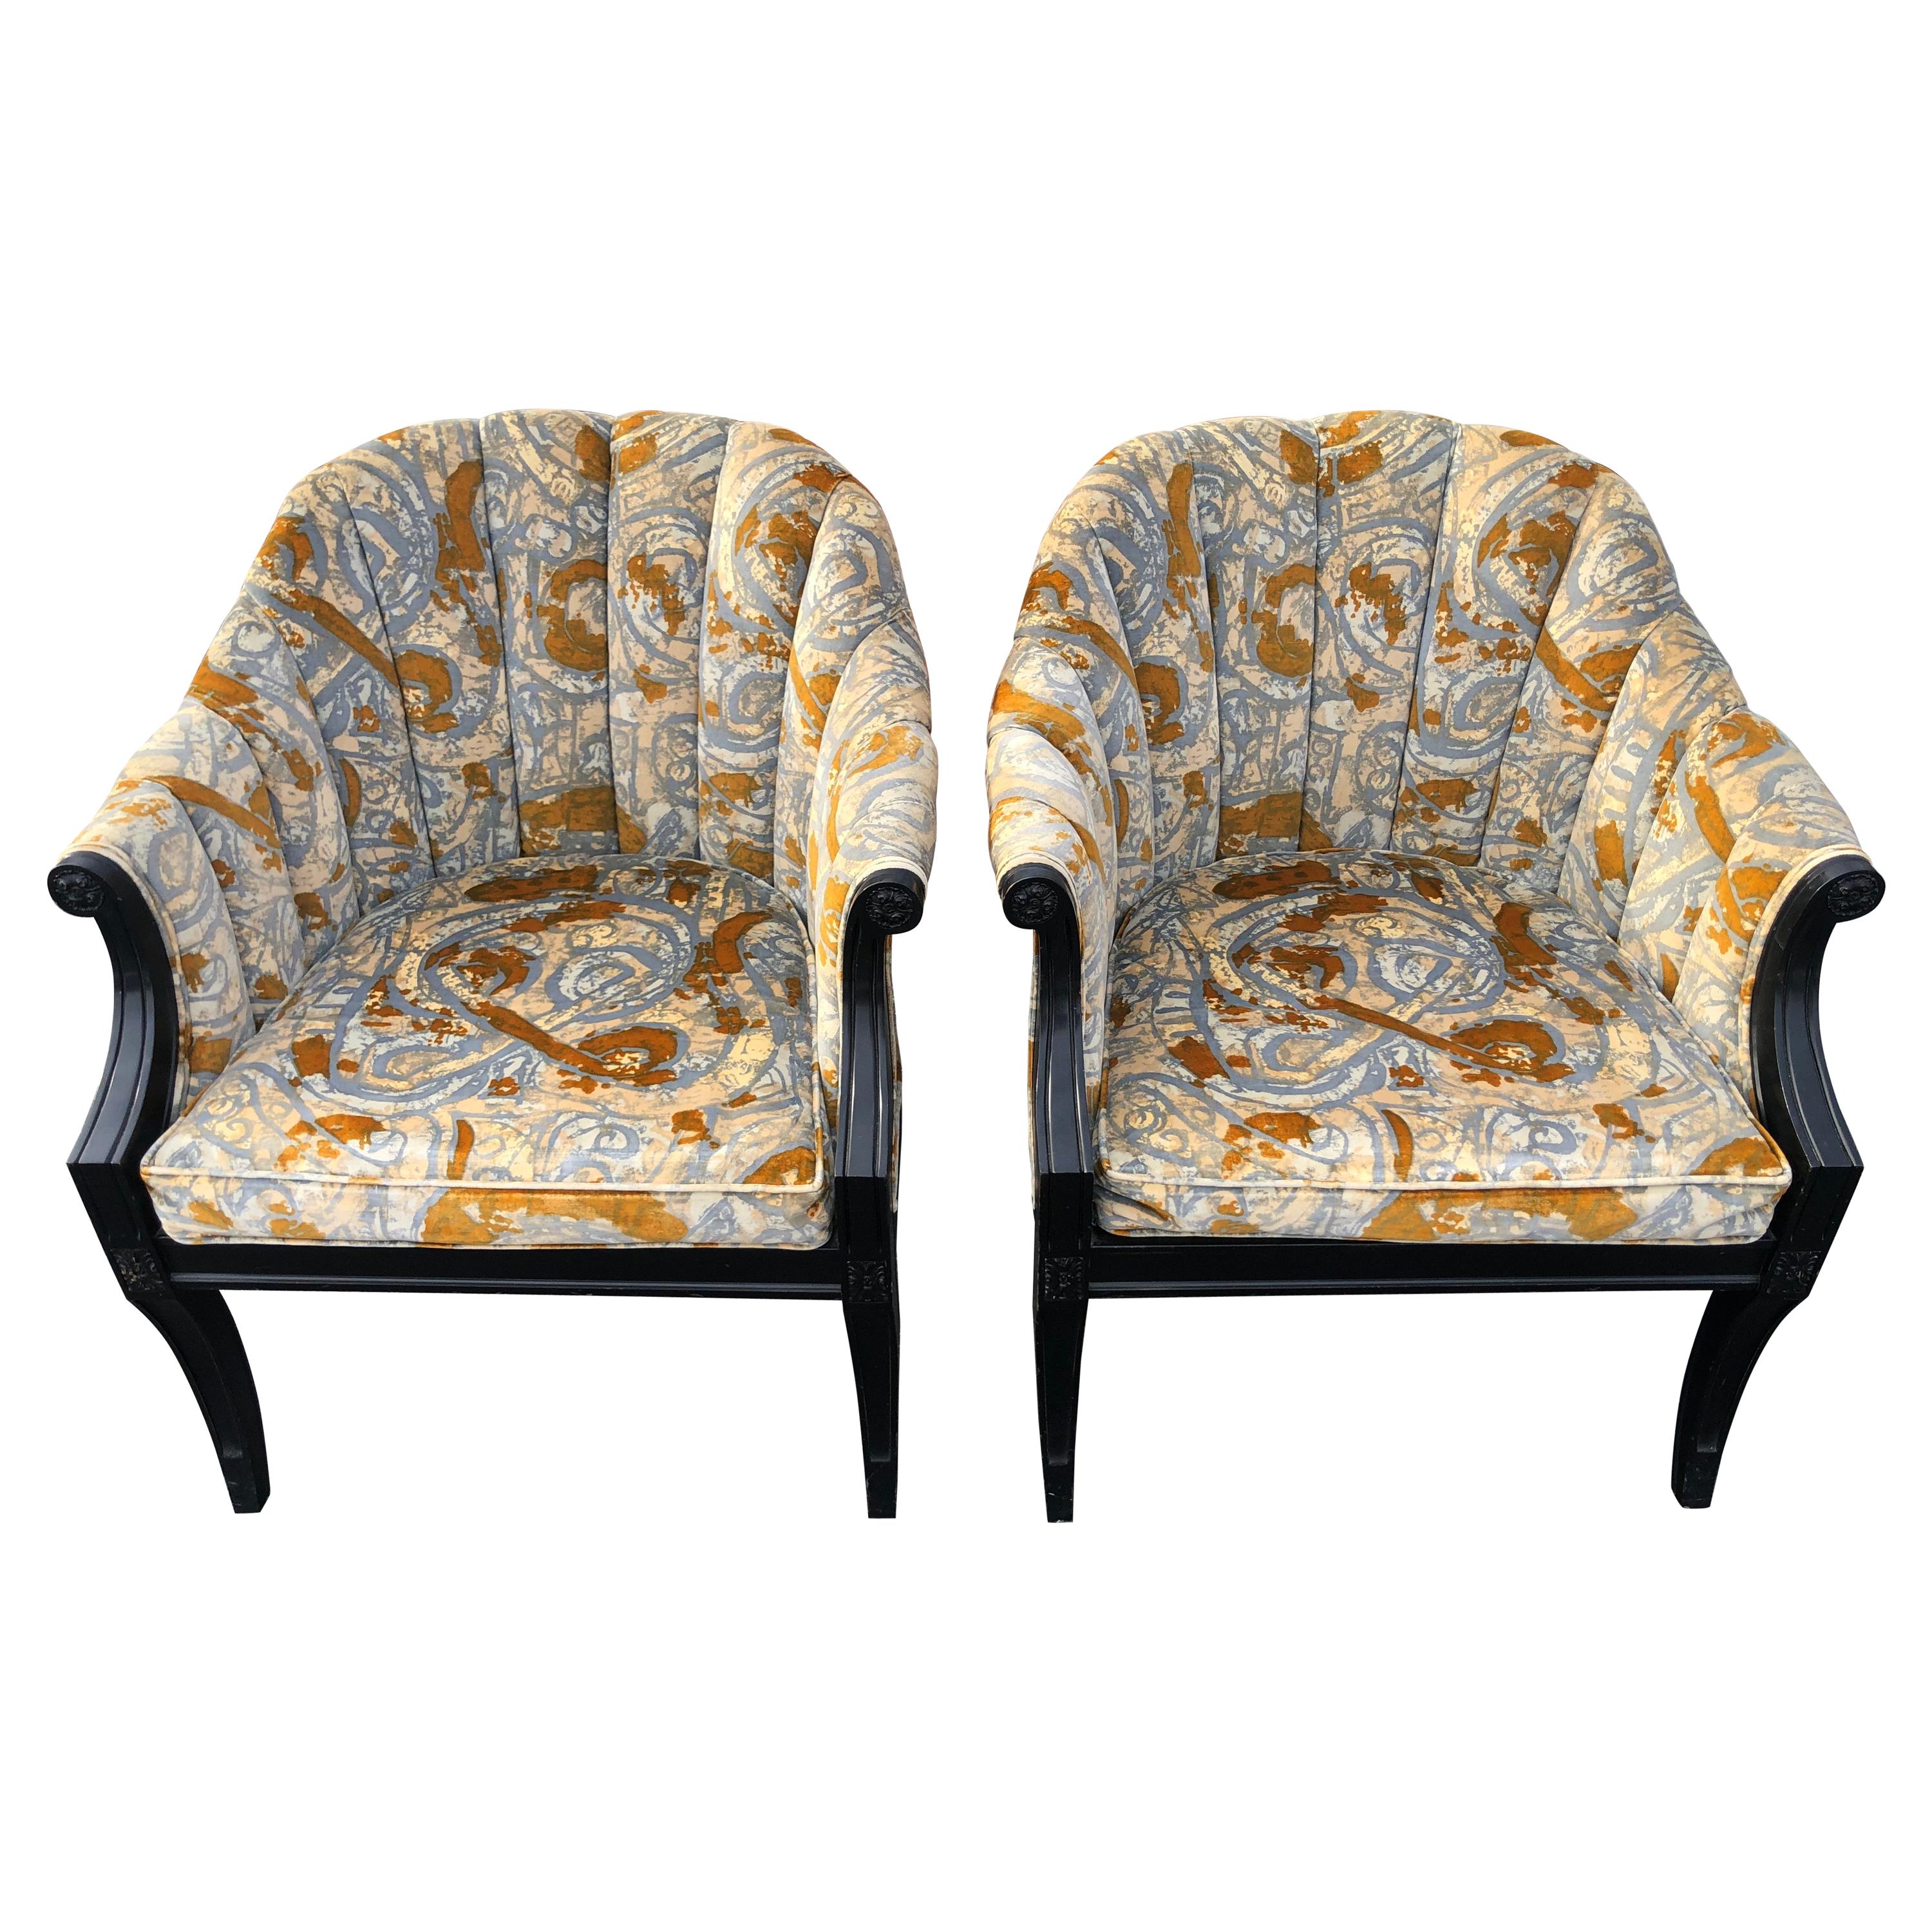 Pair of Hollywood Regency Velvet Chairs attributed to Jack Lenor Larsen